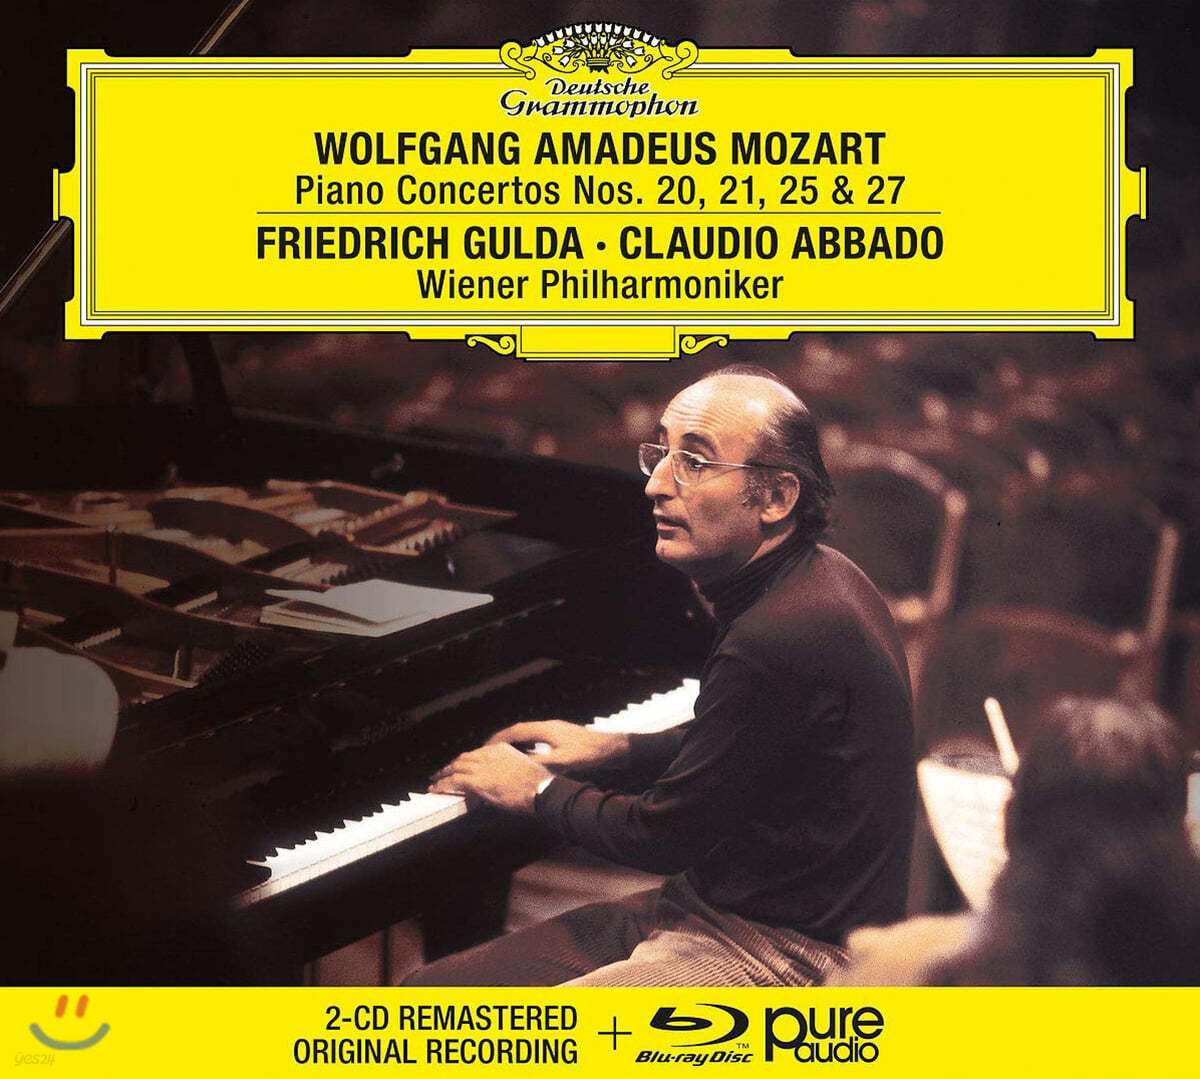 Friedrich Gulda / Claudio Abbado 모차르트: 피아노 협주곡 20, 21, 25, 27번 (Mozart: Piano Concertos K466, 467, 503, 595)